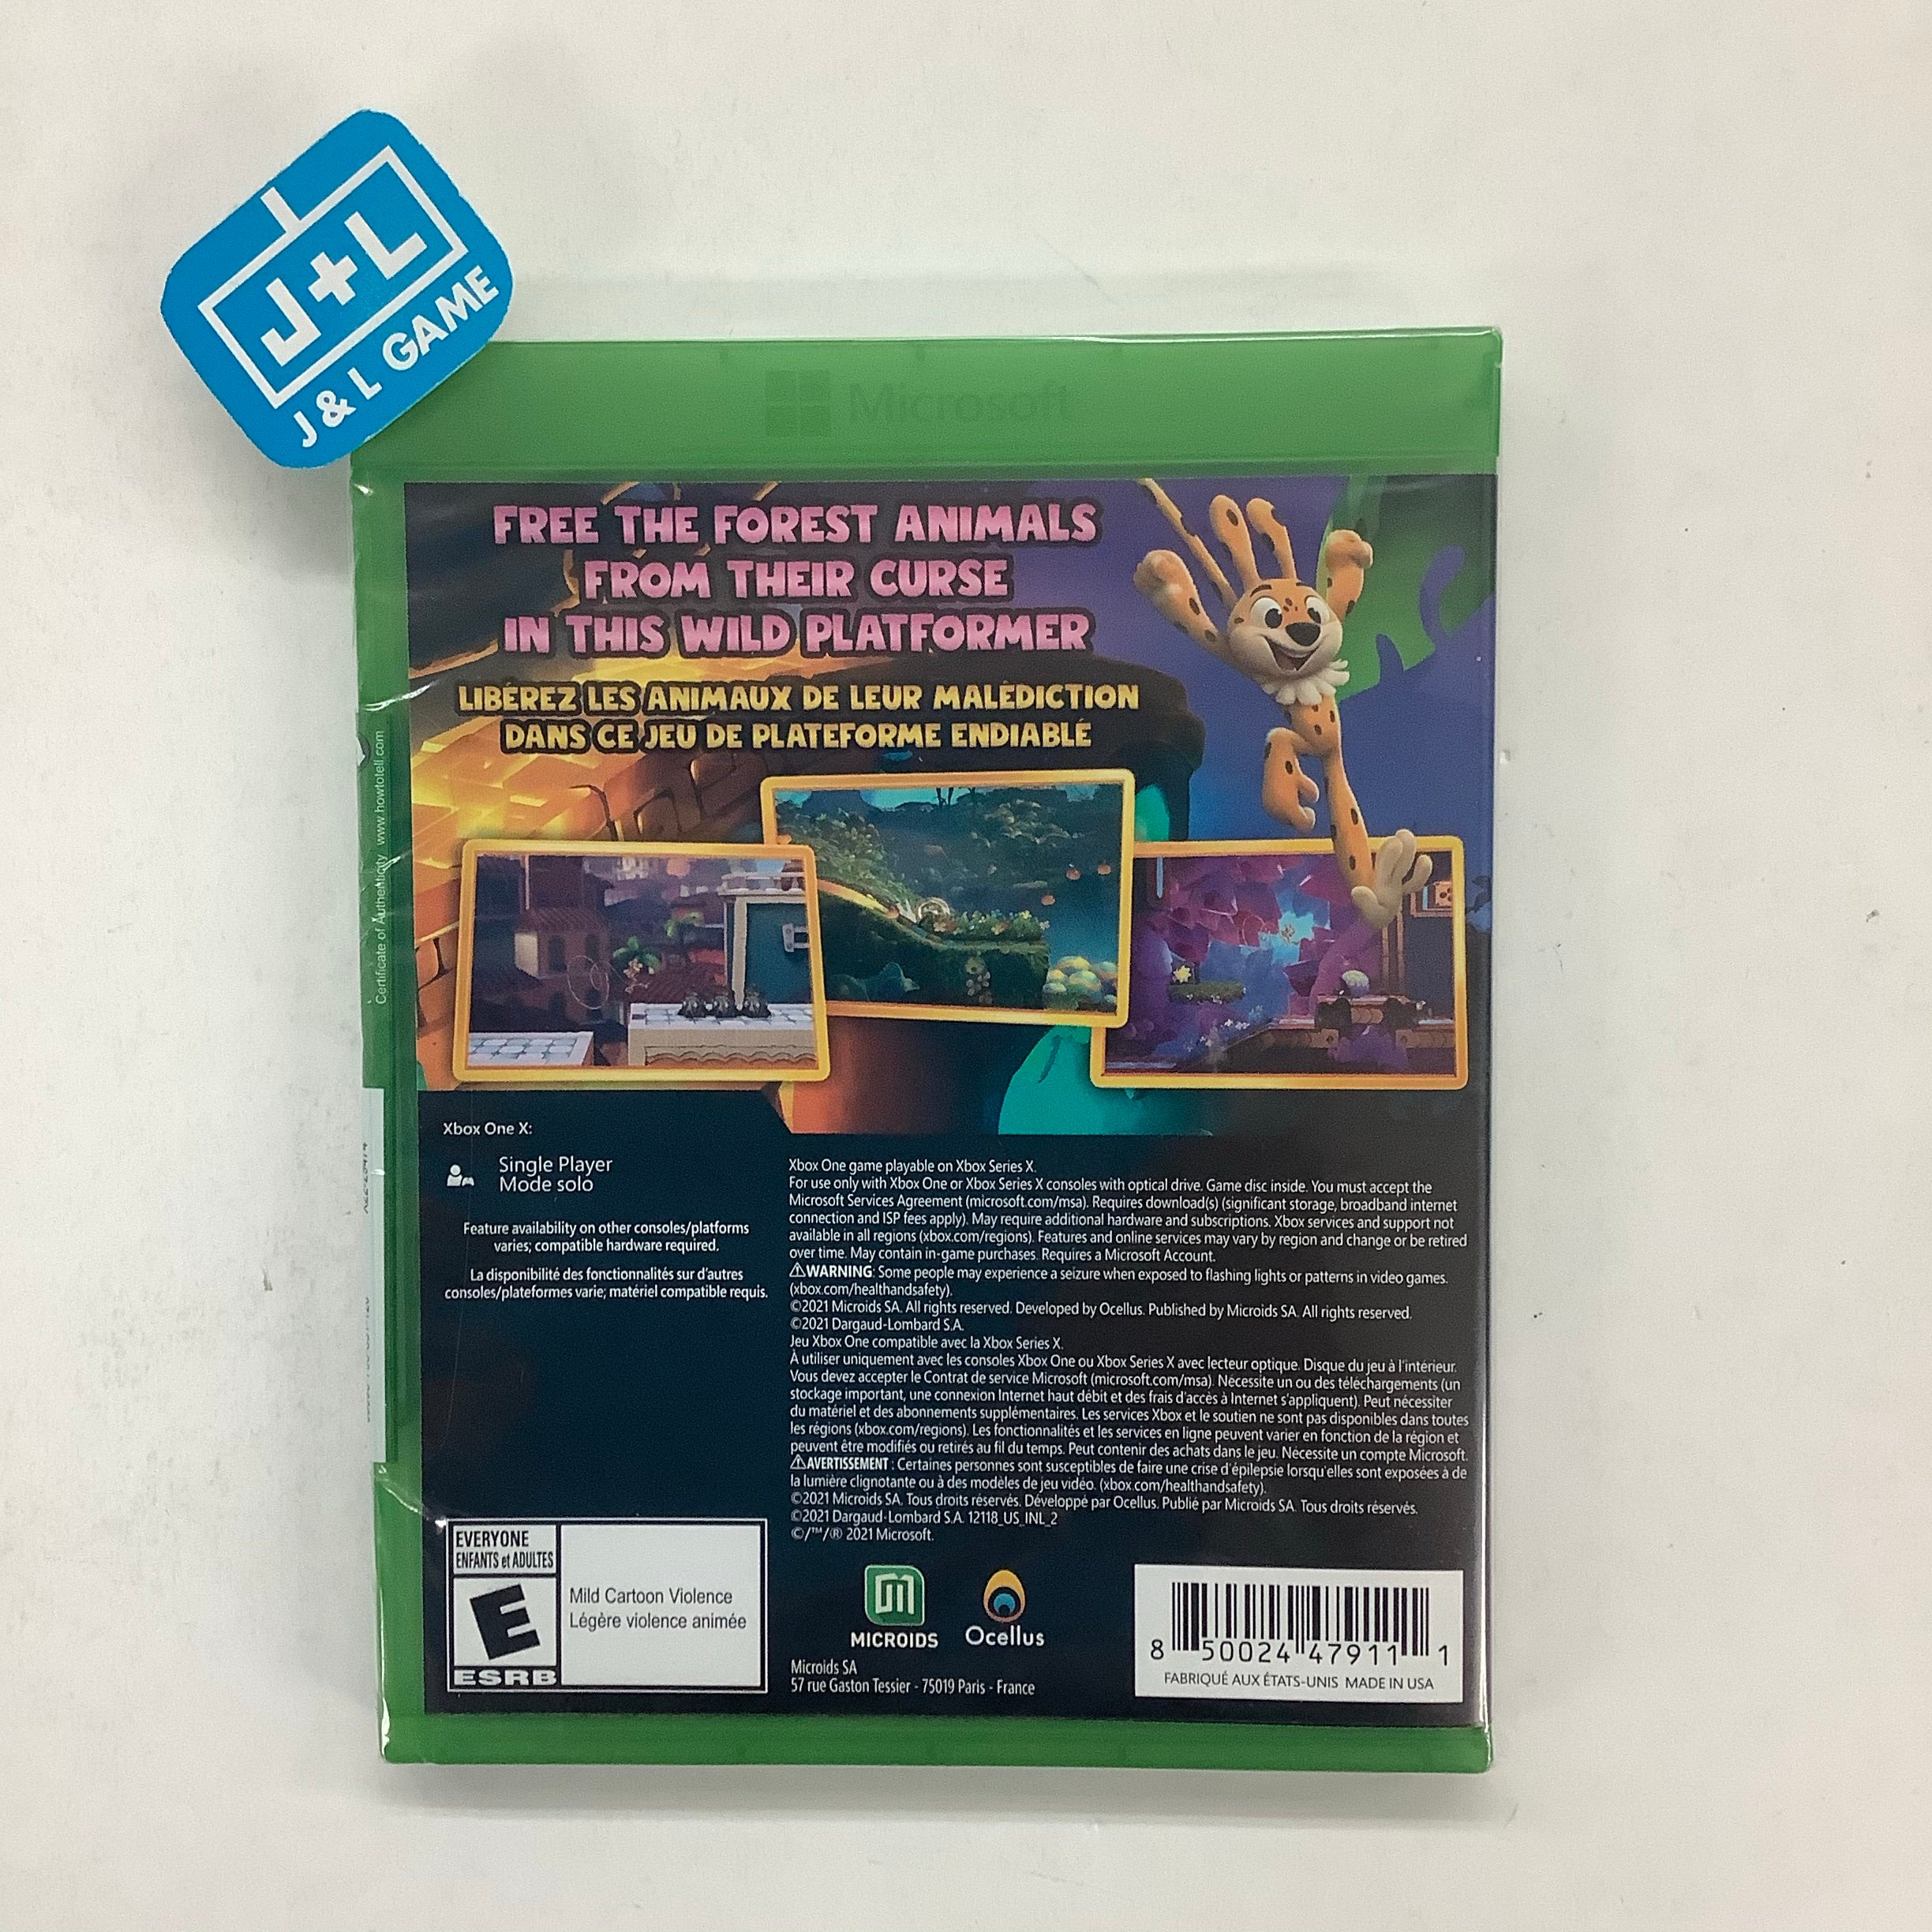 Marsupilami: Hoobadventure - (XB1) XBox One Video Games Maximum Games   